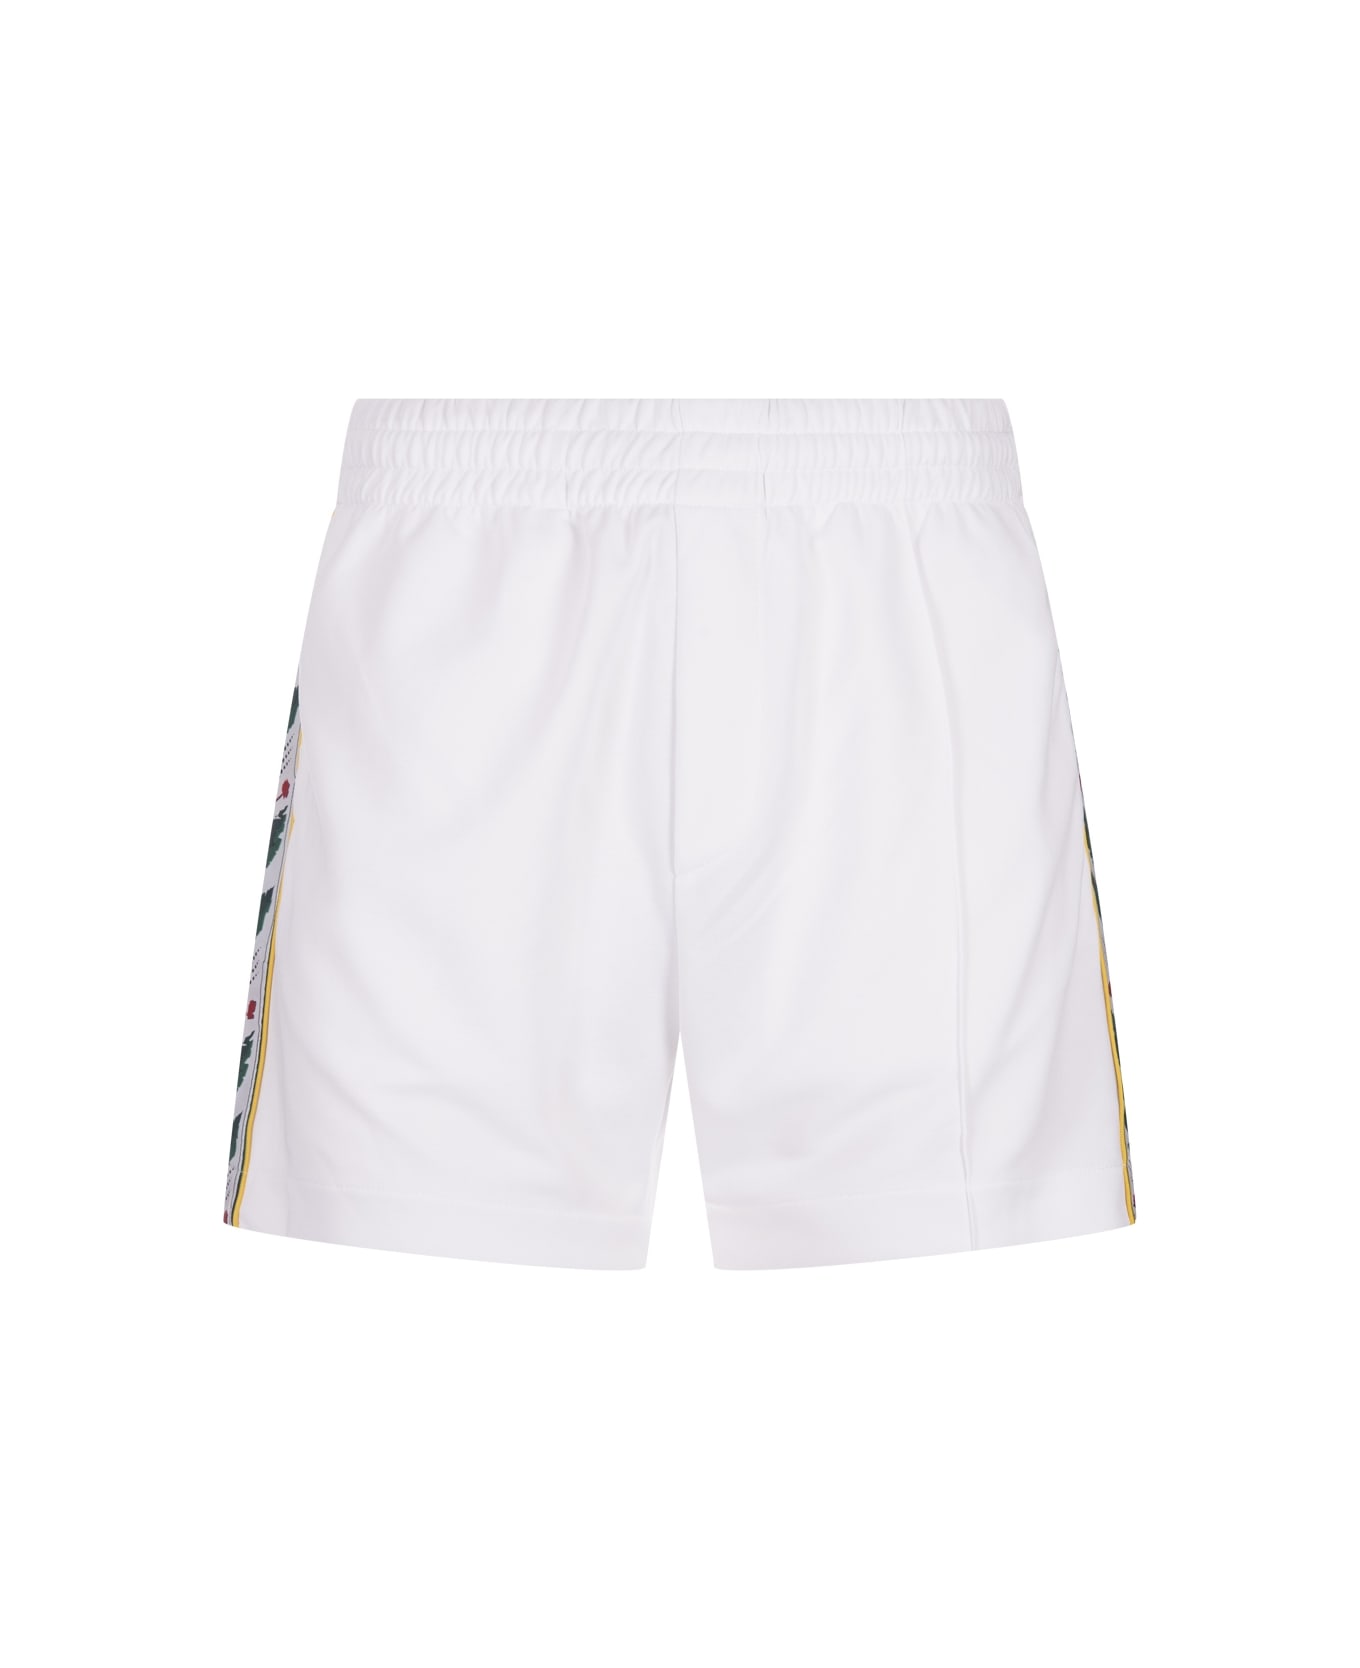 Casablanca White Shorts With Laurel Graphics - White